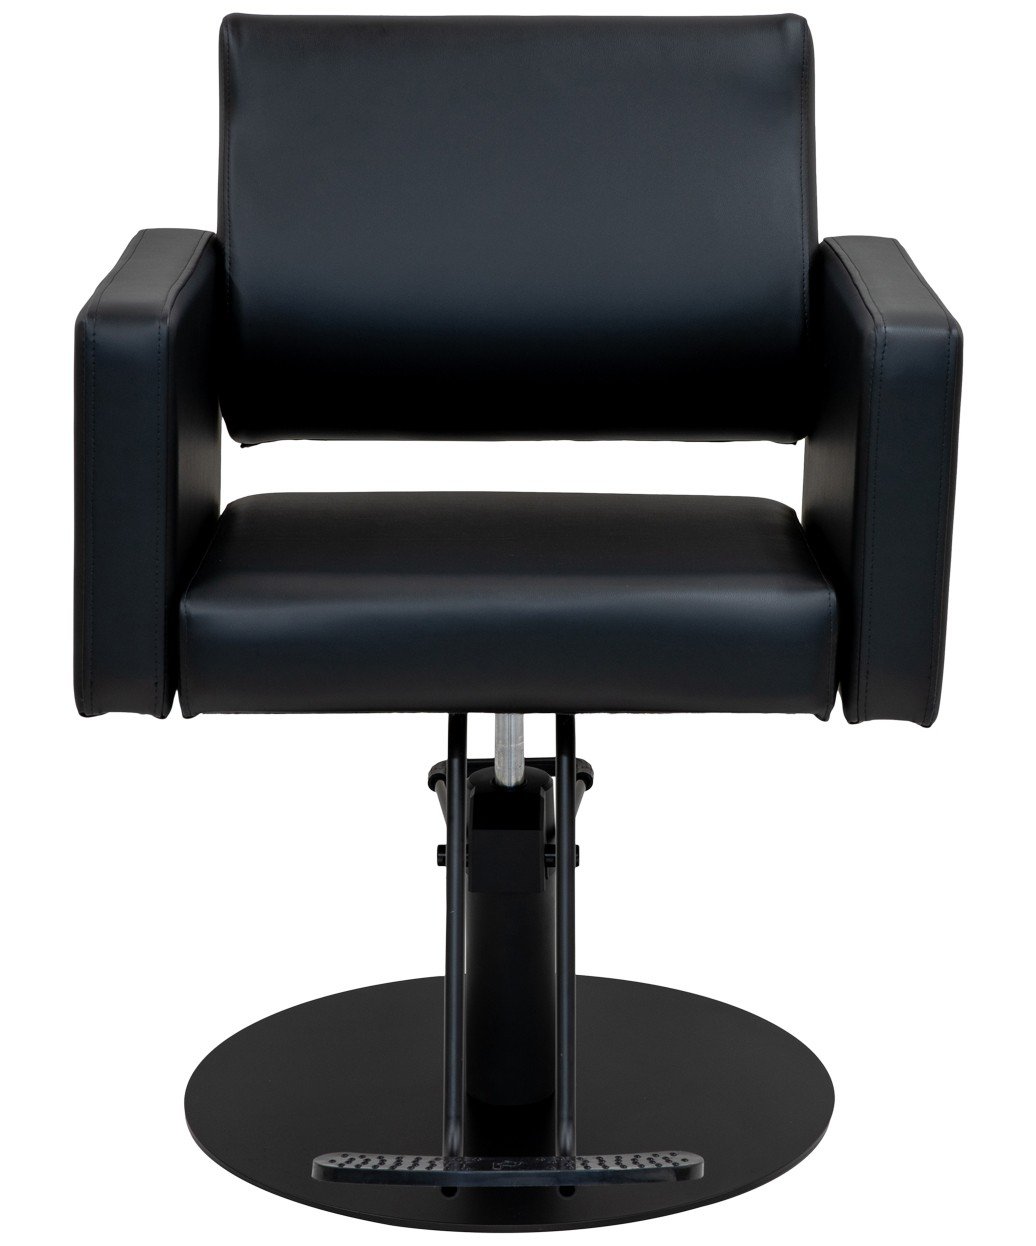 Pibbs 3006 Bossa Styling Chair